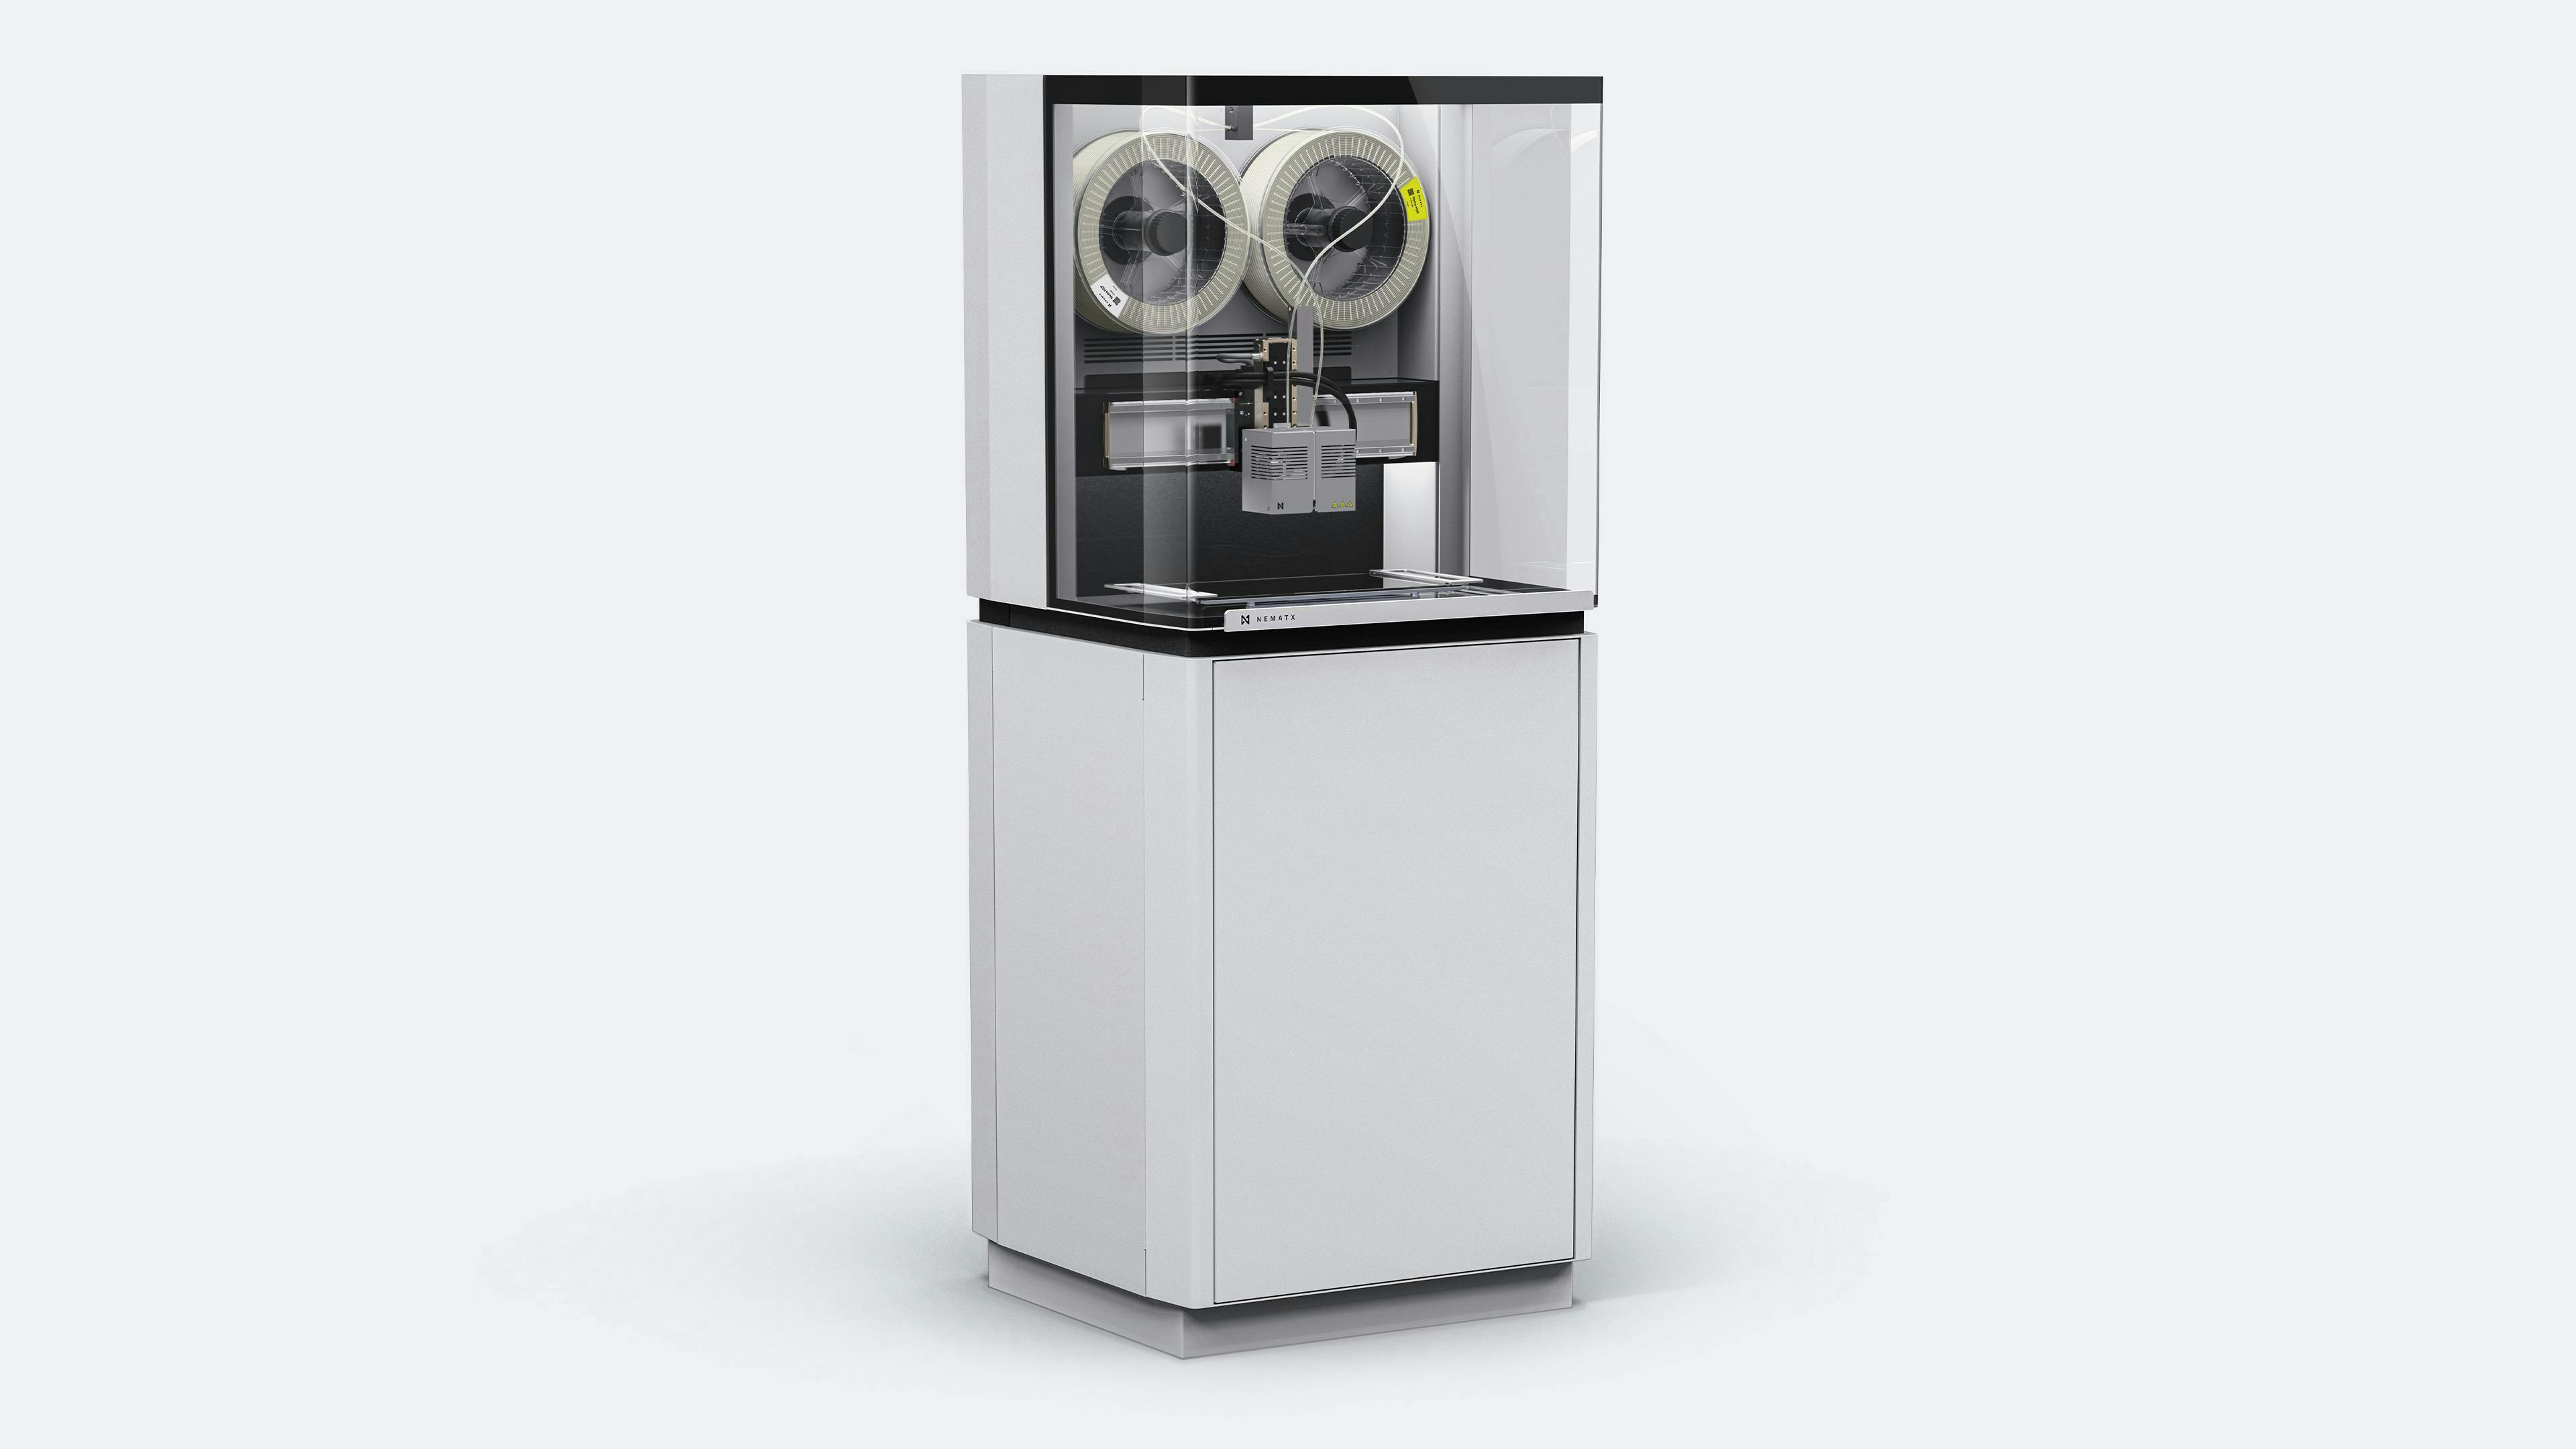 Industrial Design of a 3D Printer for NematX designed by FOND Design